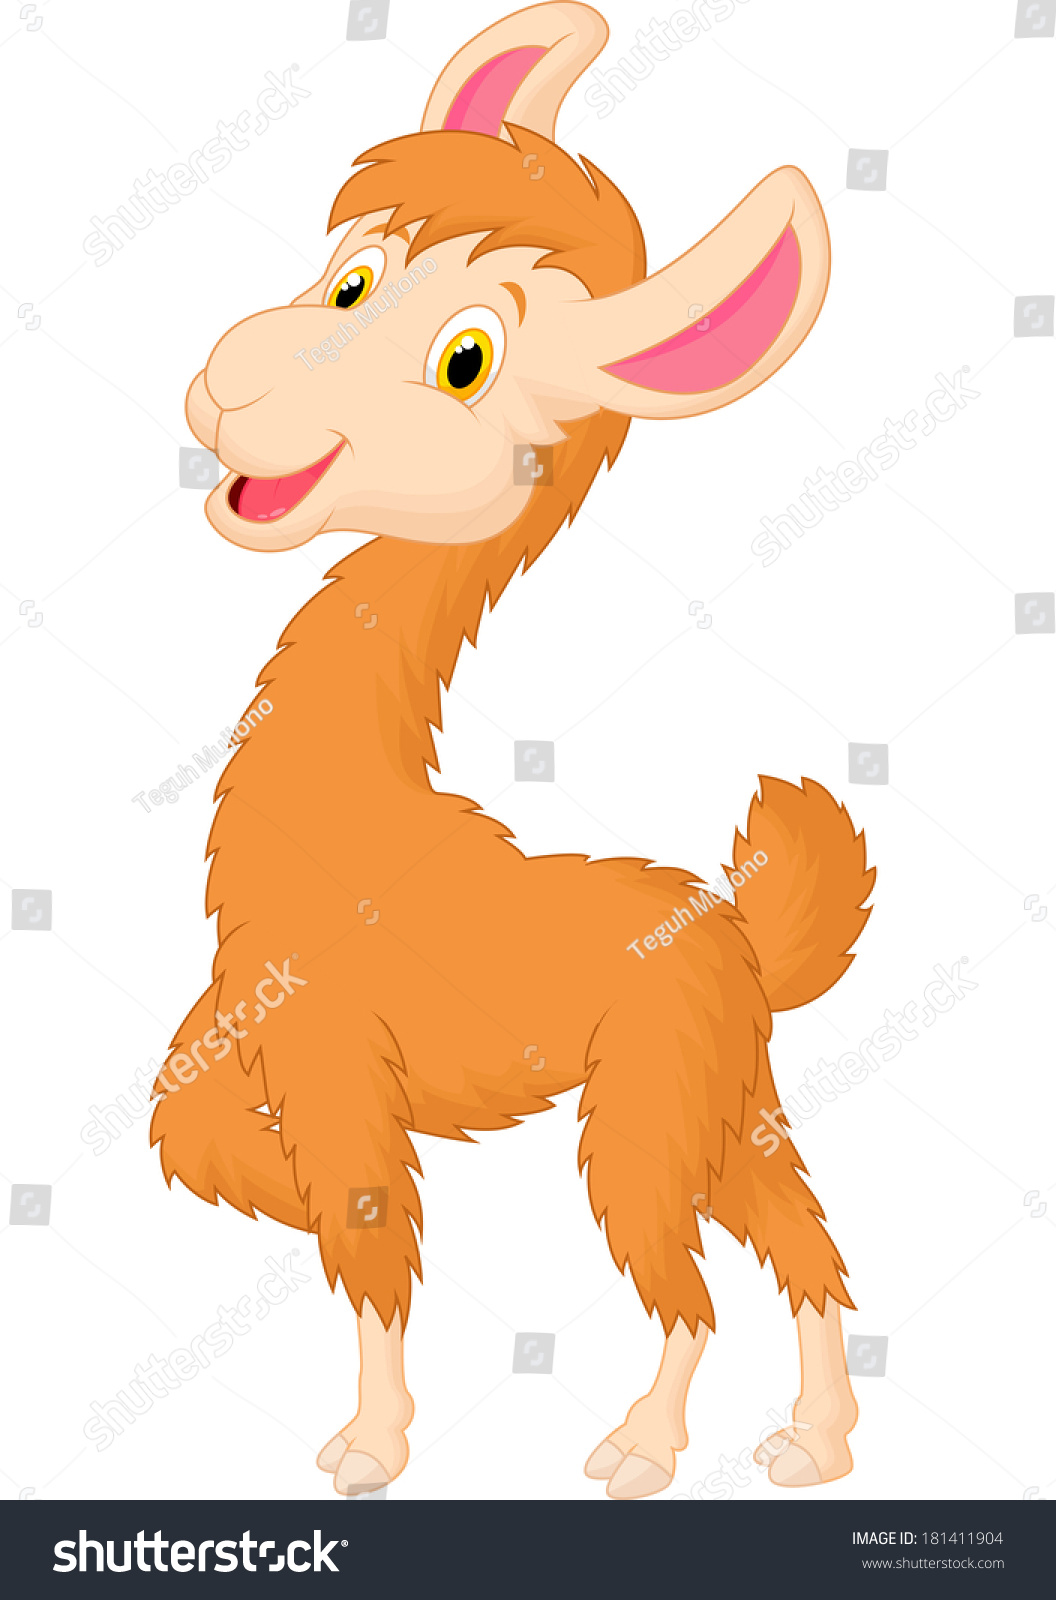 Happy Llama Cartoon Stock Vector 181411904 - Shutterstock